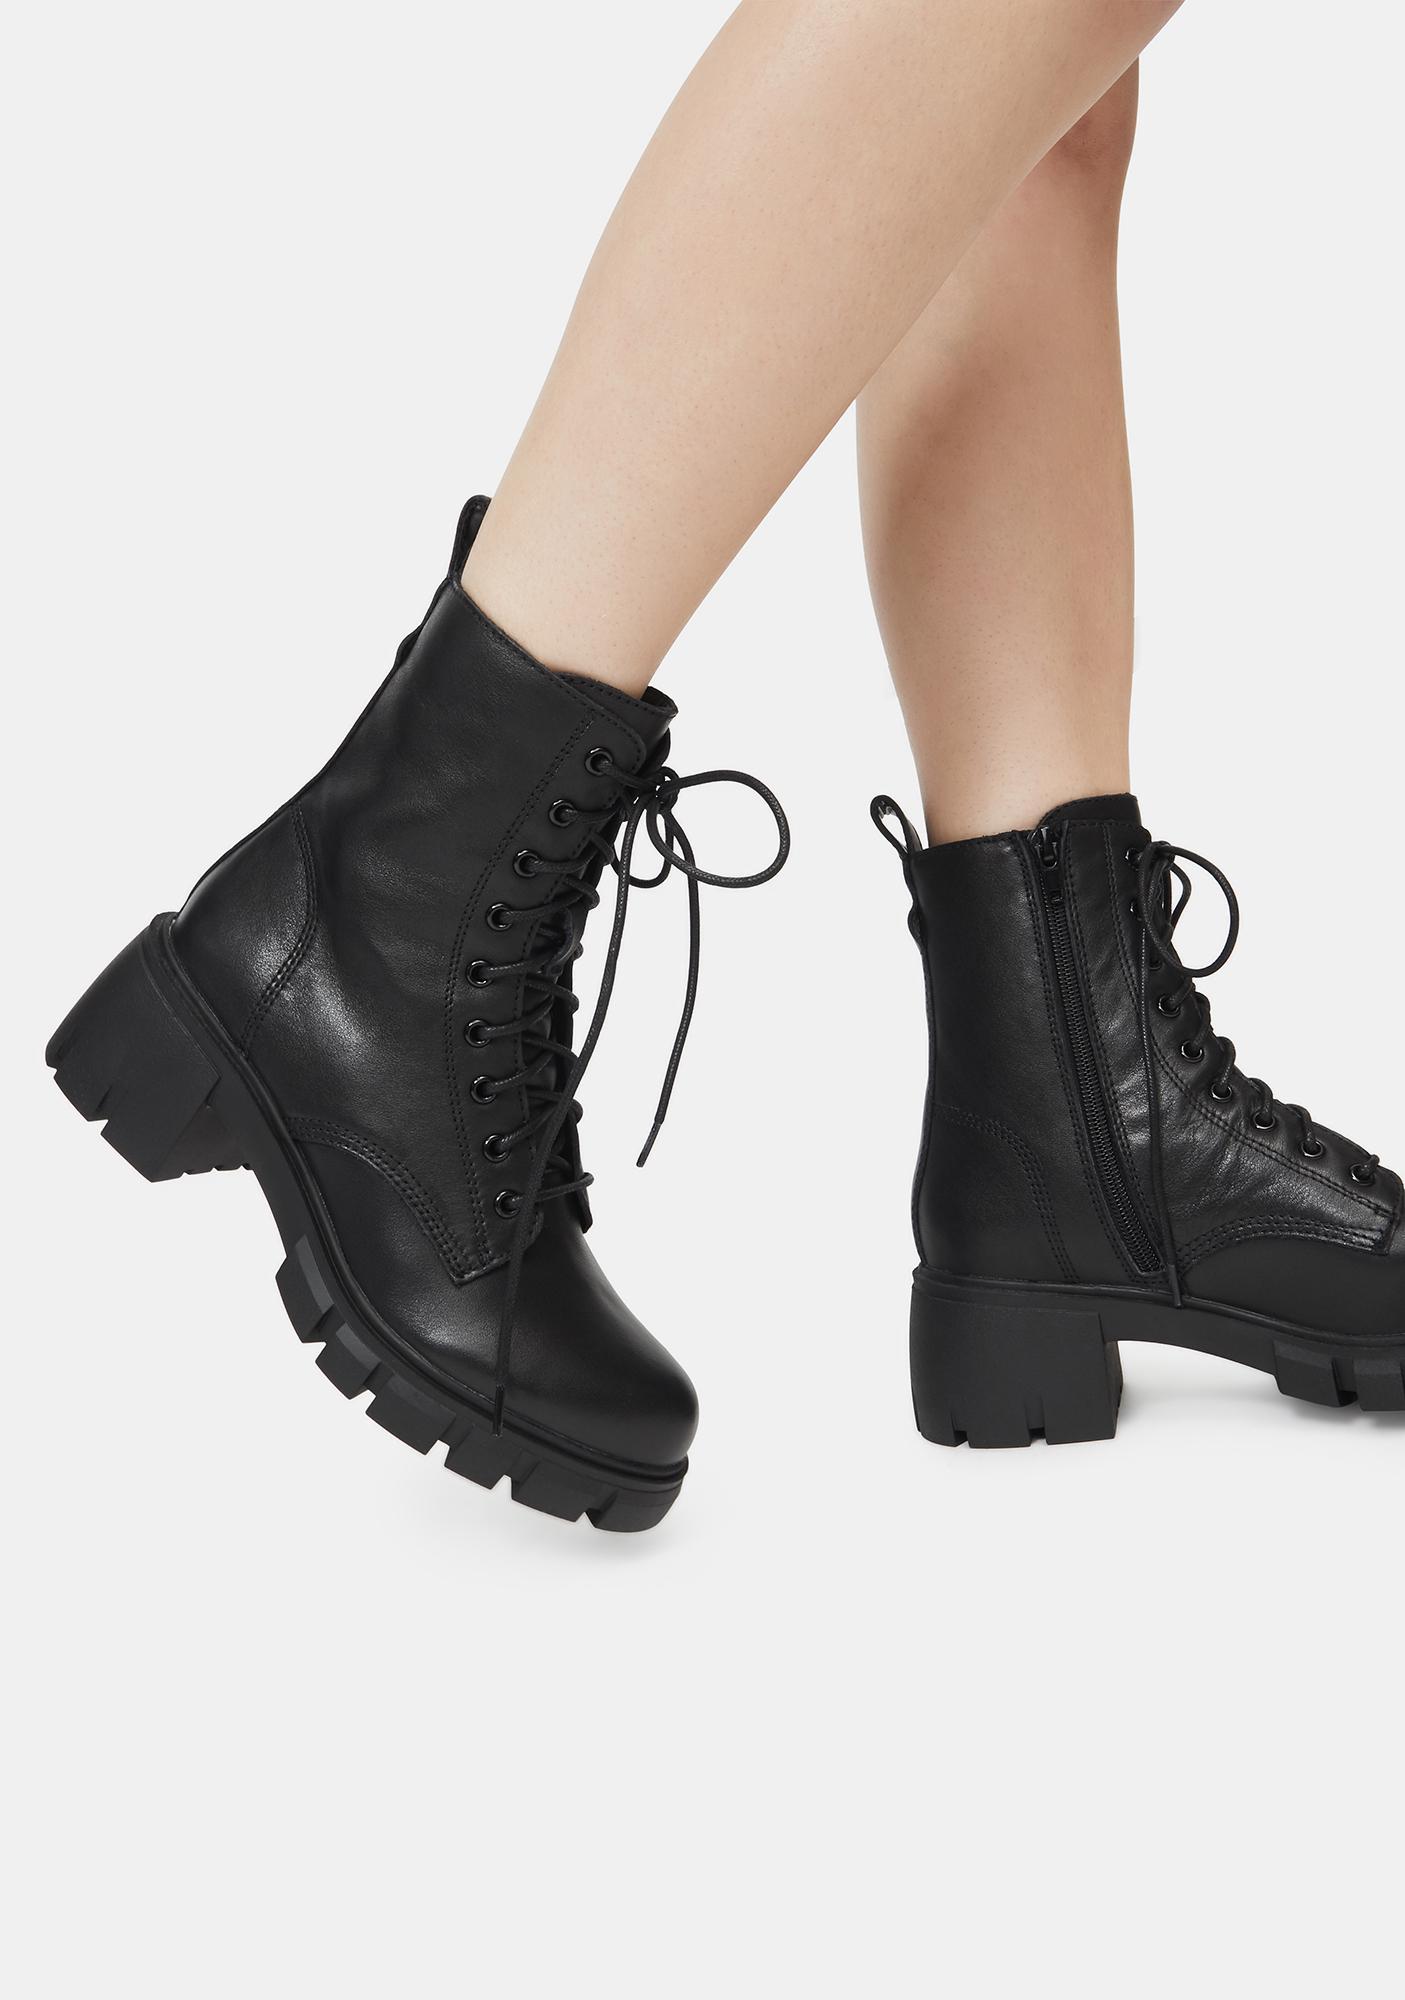 Miss Lola Combat Boots for Women | Mercari